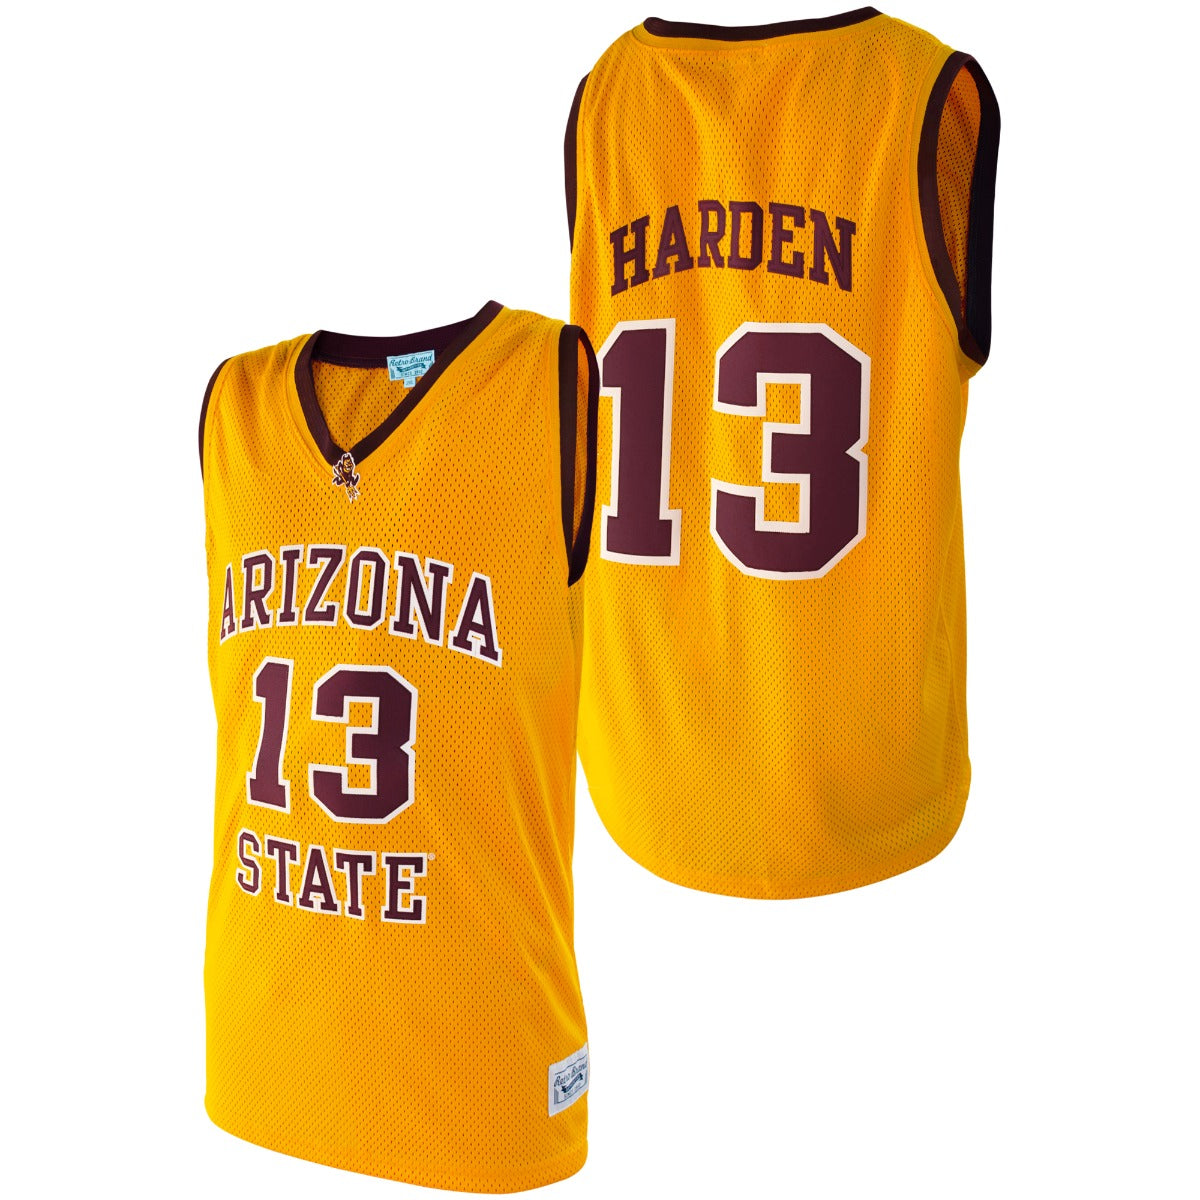 James Harden NBA Discounted Jerseys, Cheap James Harden Shirts